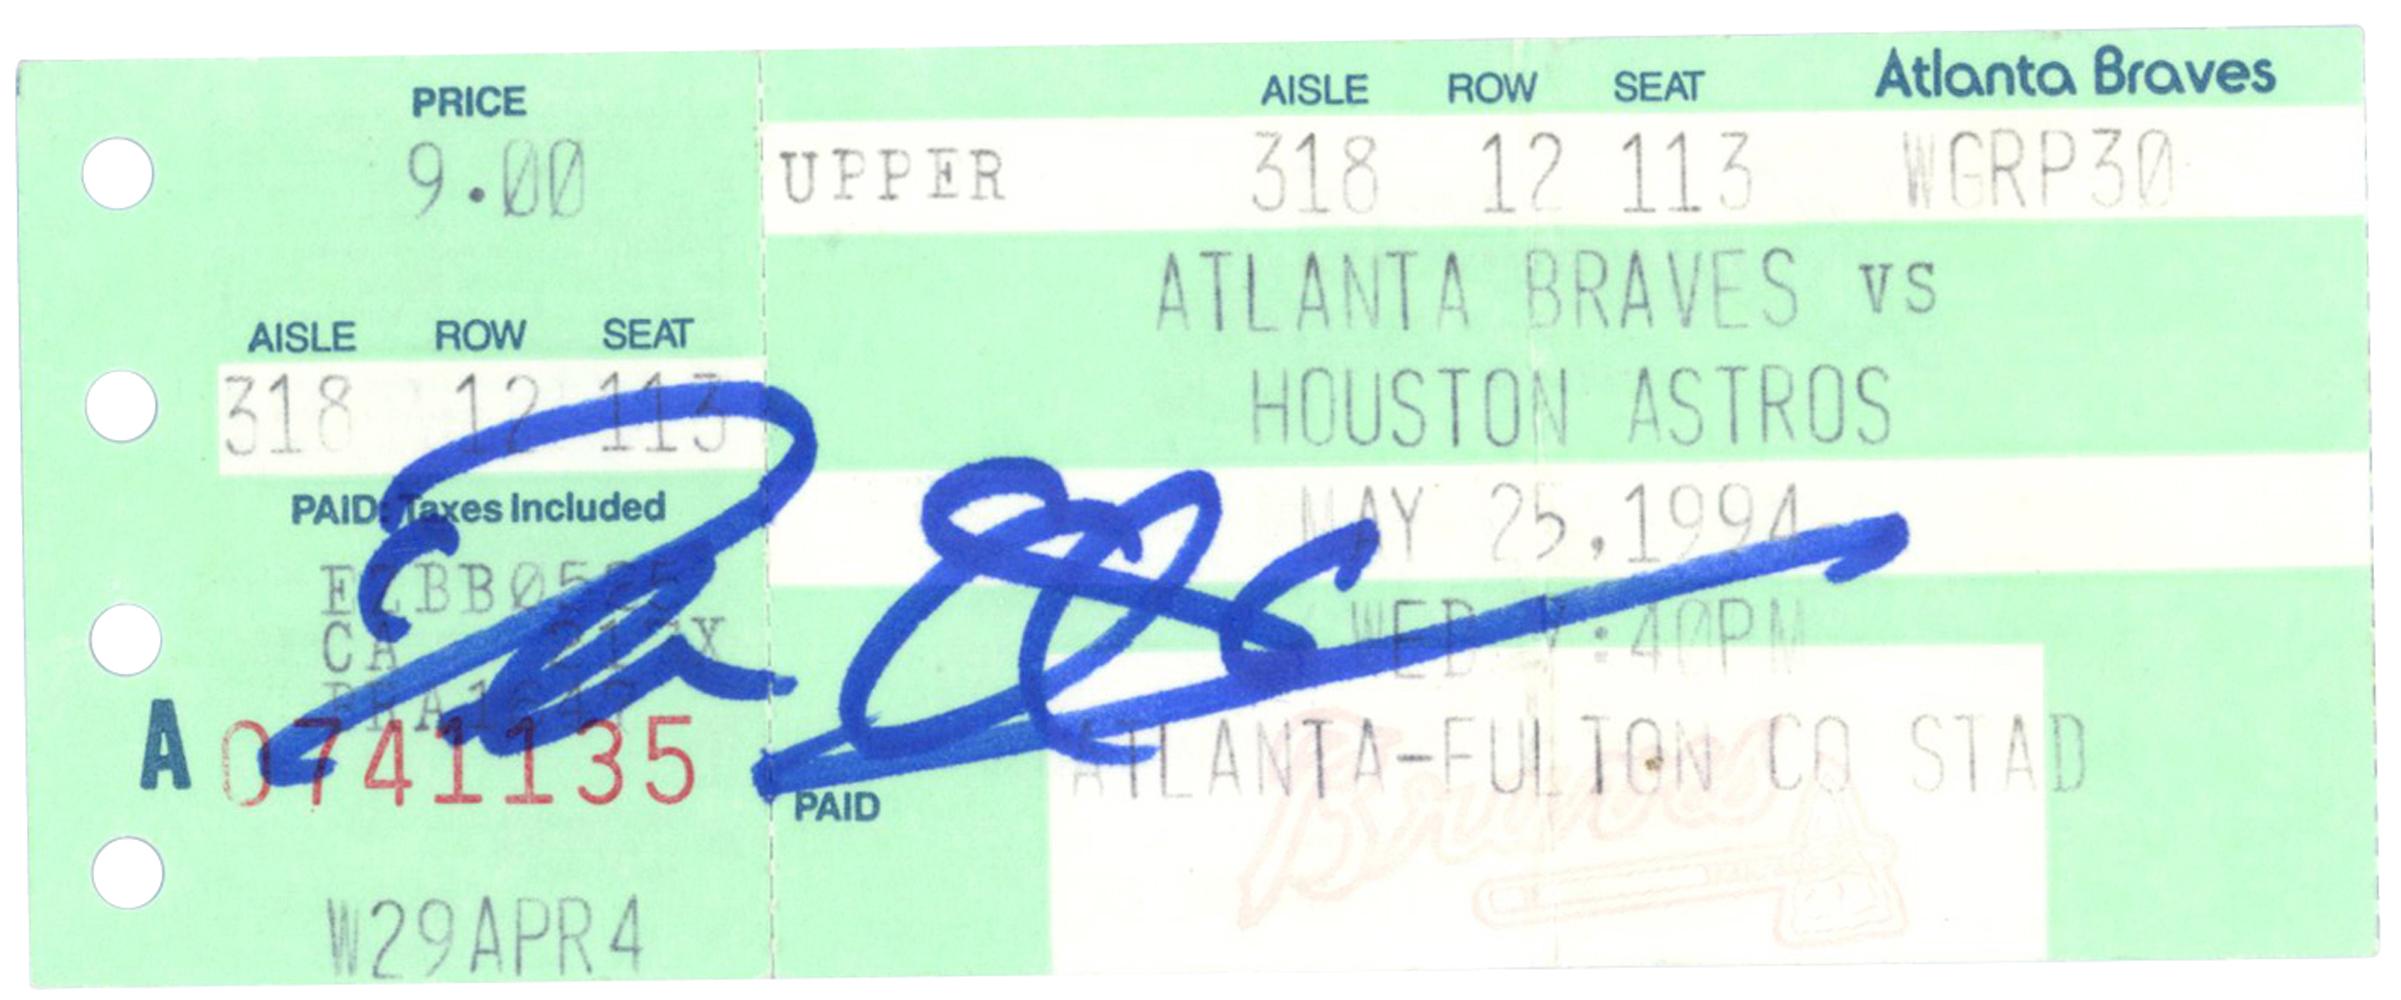 Deion Sanders Autographed Atlanta Braves 5/17/1994 vs Reds Ticket BAS